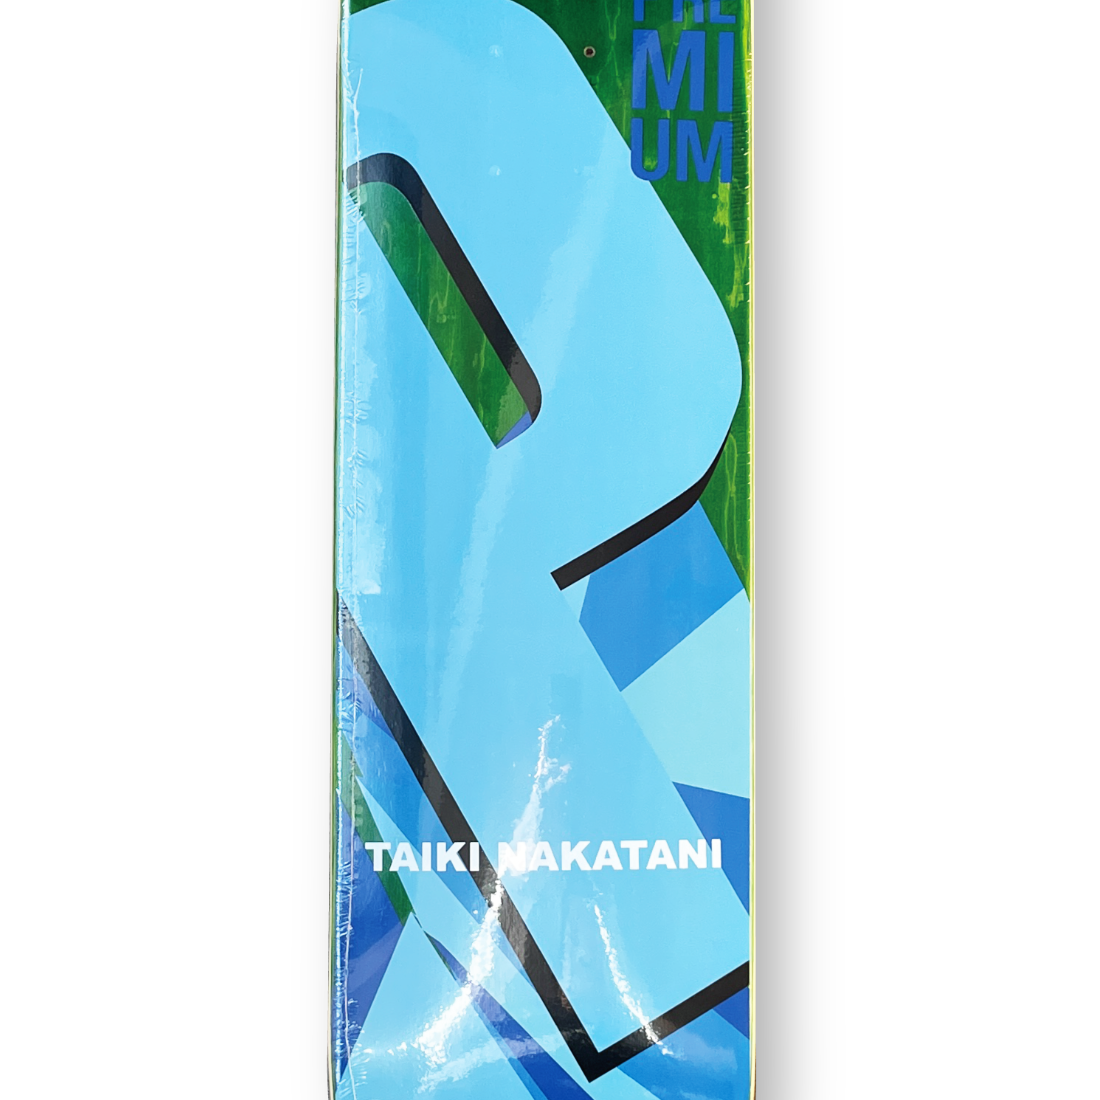 (子供用)【7.25】Premium Skateboards - Big P "Taiki Nakatani"